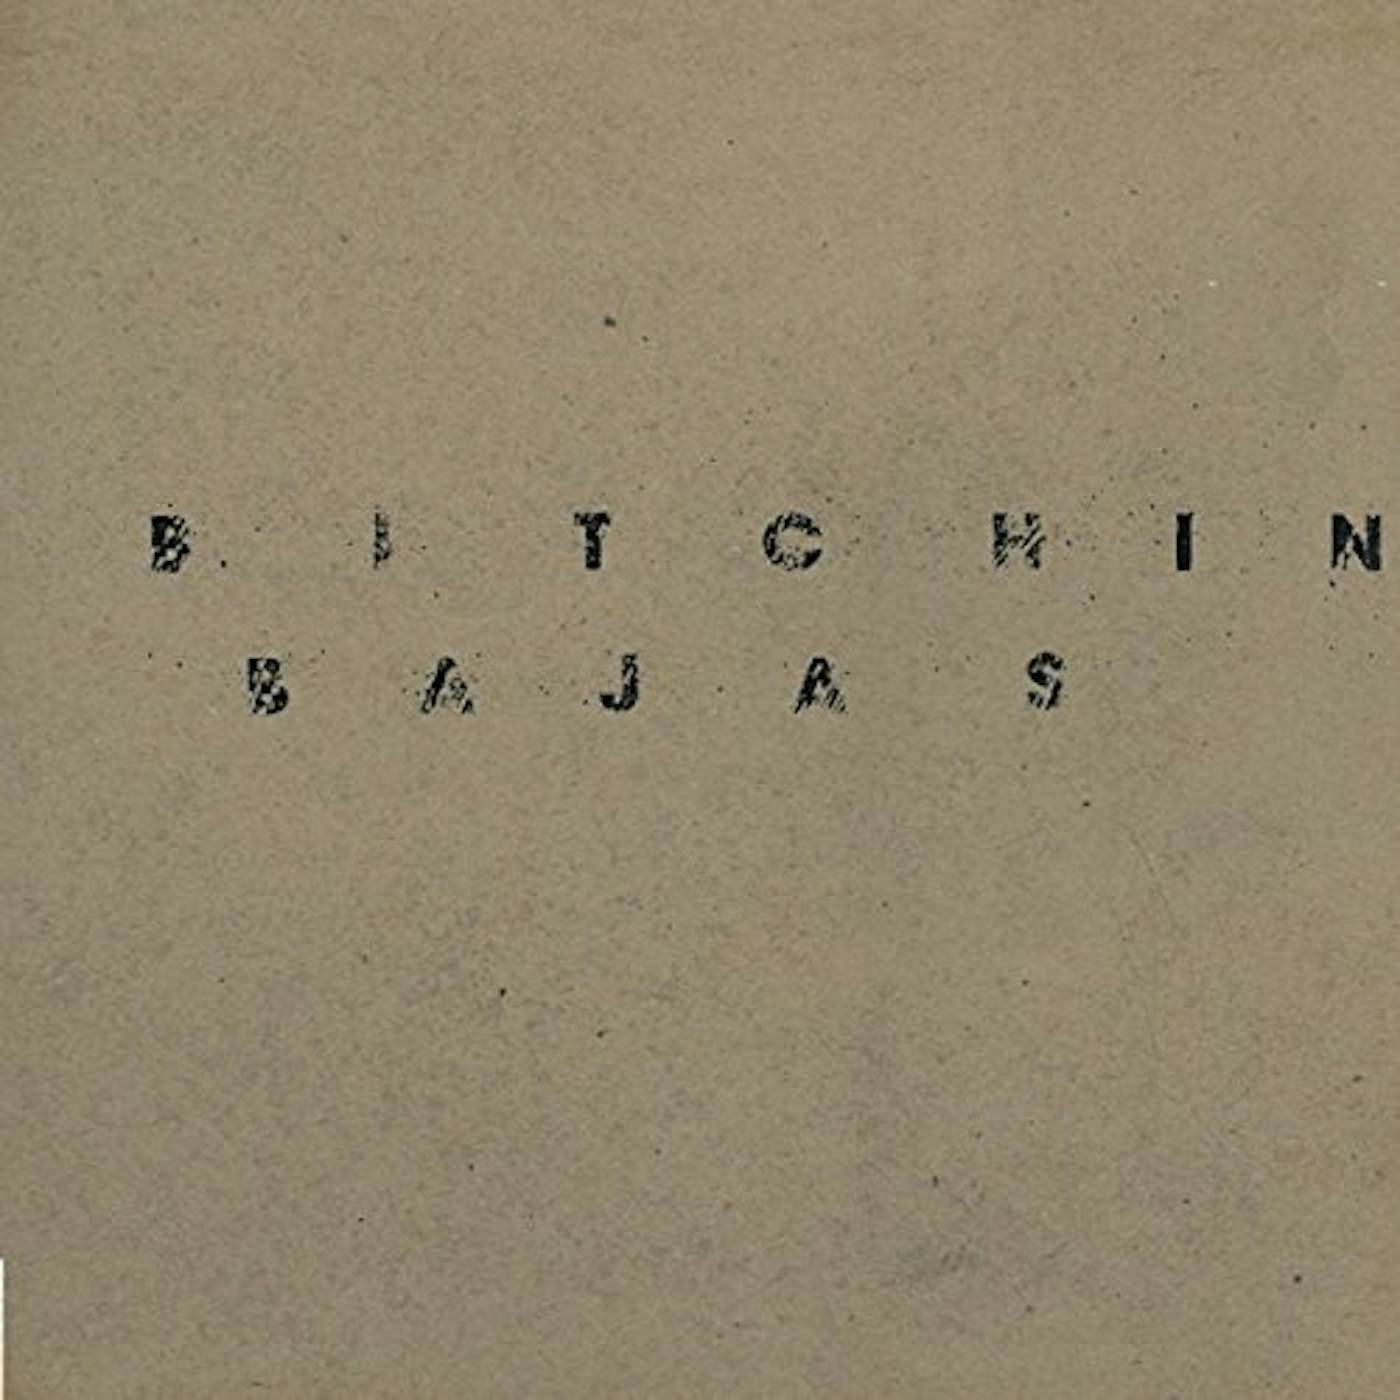 Bitchin Bajas Vinyl Record